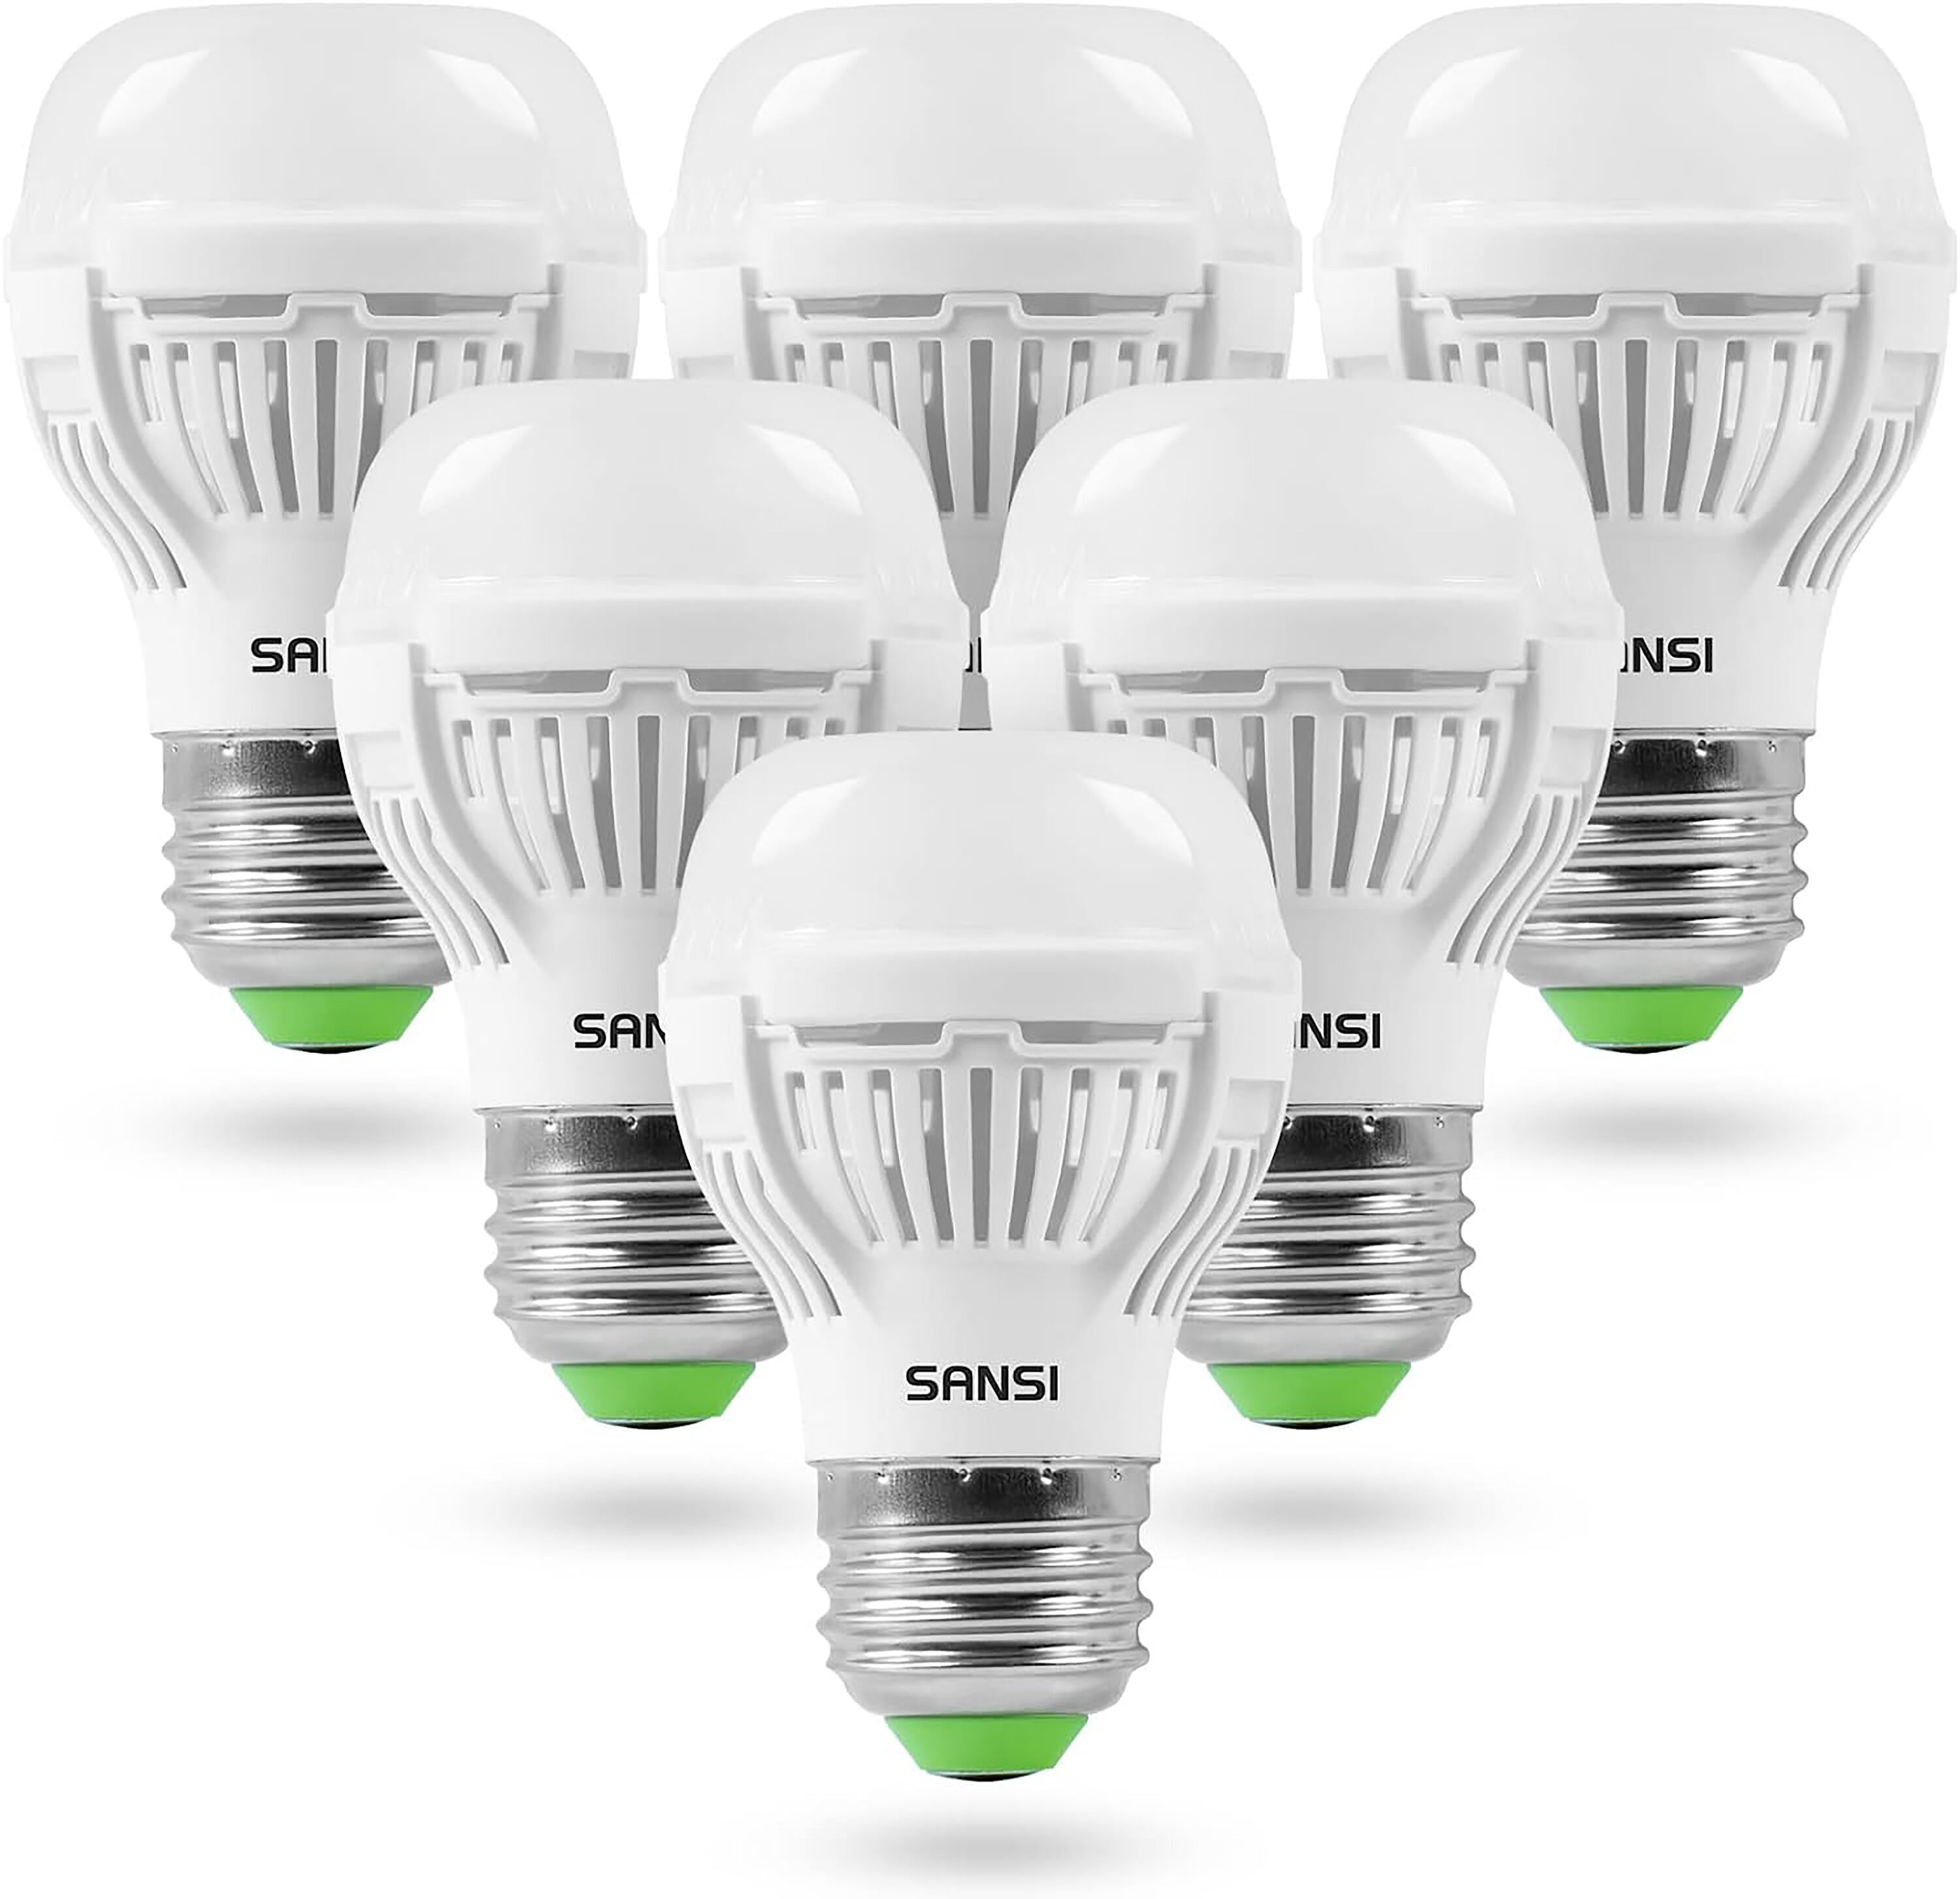 de jouwe Groet Afdeling SANSI LED light bulbs 60-Watt EQ A15 Cool White E26 LED Light Bulb (6-Pack)  in the General Purpose LED Light Bulbs department at Lowes.com